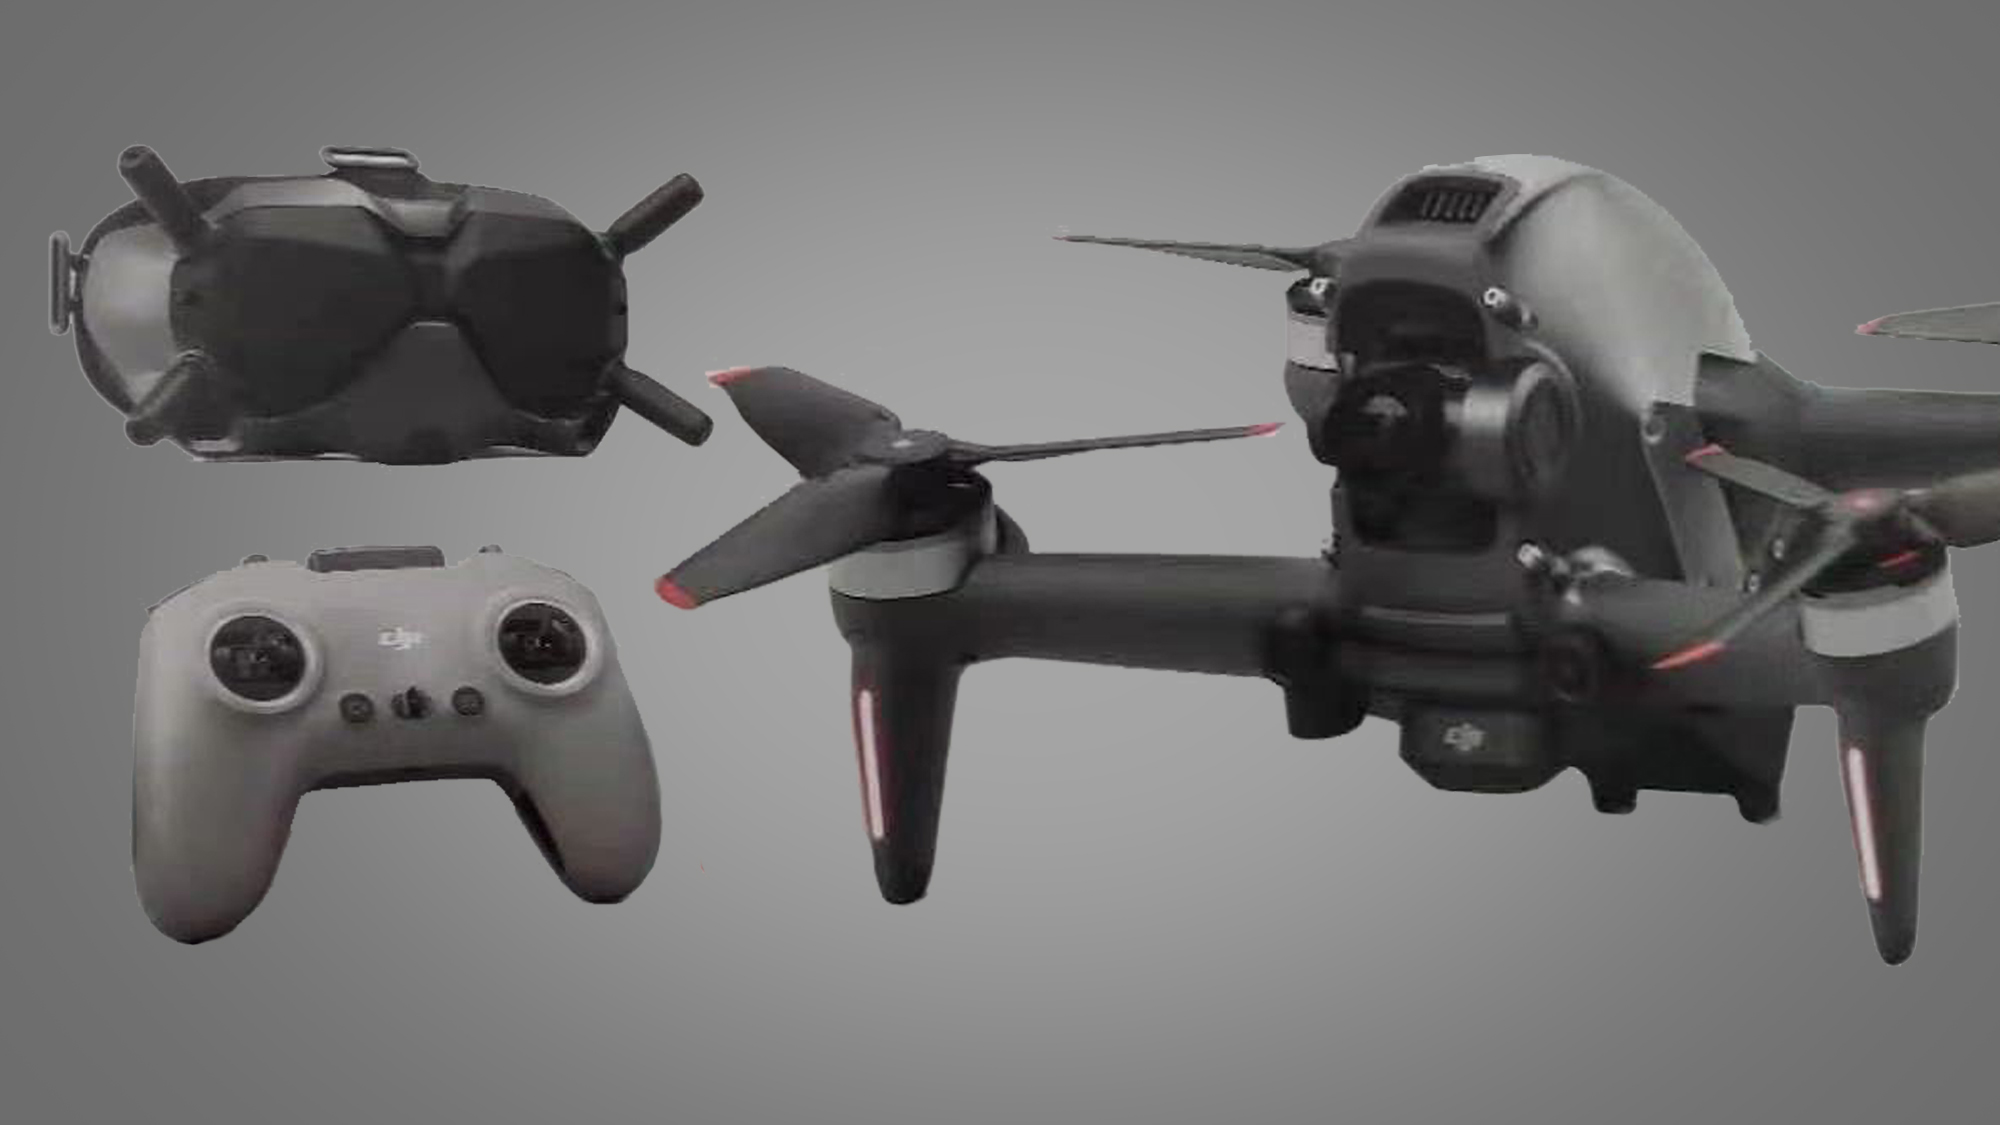 DJI FPV drone release date, price, rumors and leaks | TechRadar